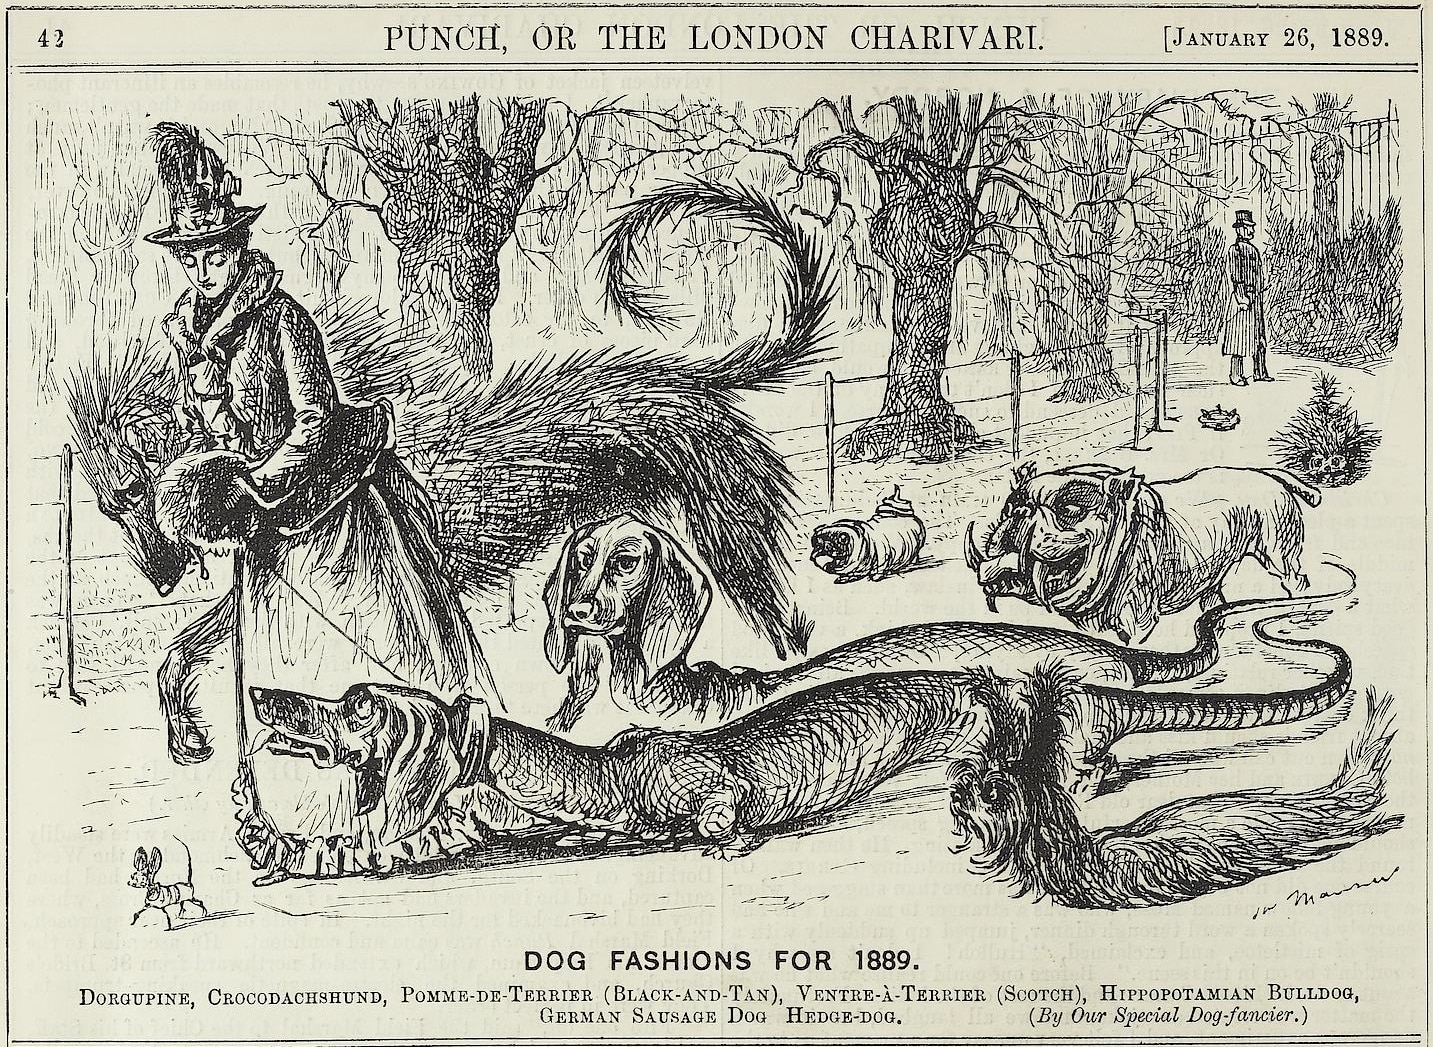 Dog Fashions For 1889 - Punch magazine, January 26, 1889